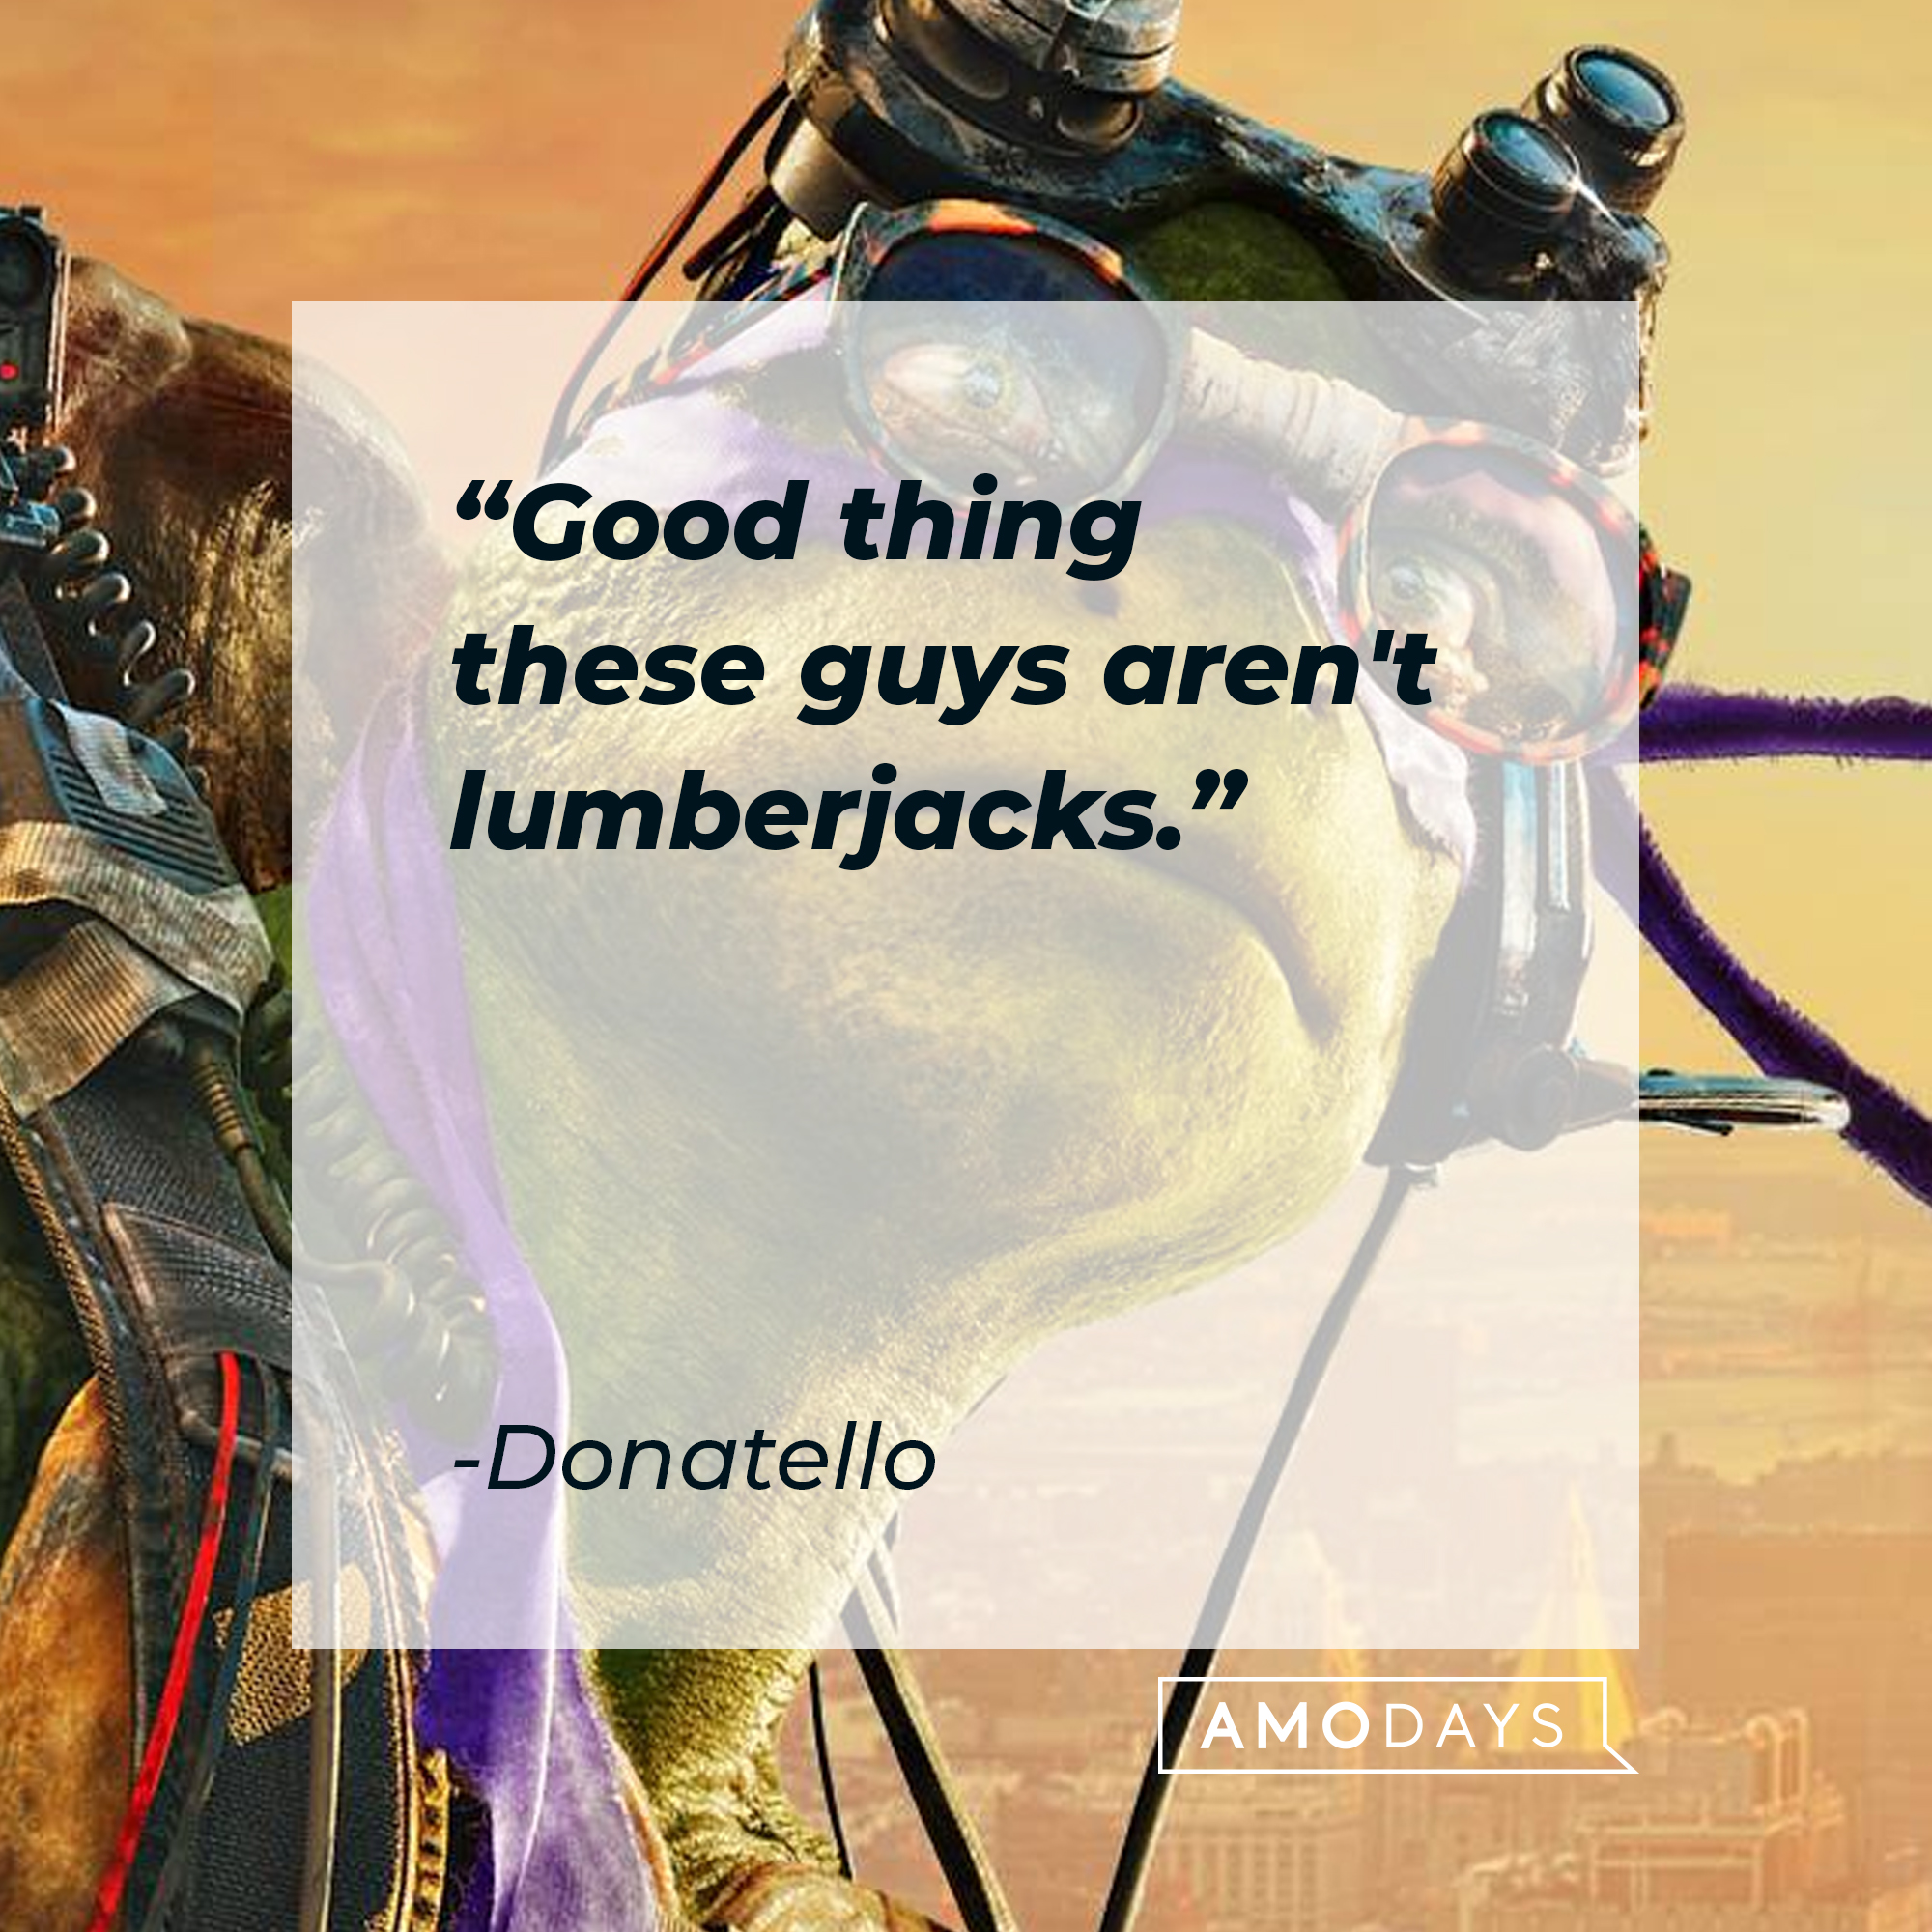 Donatello's quote: "Good thing these guys aren't lumberjacks." | Source: facebook.com/TMNT